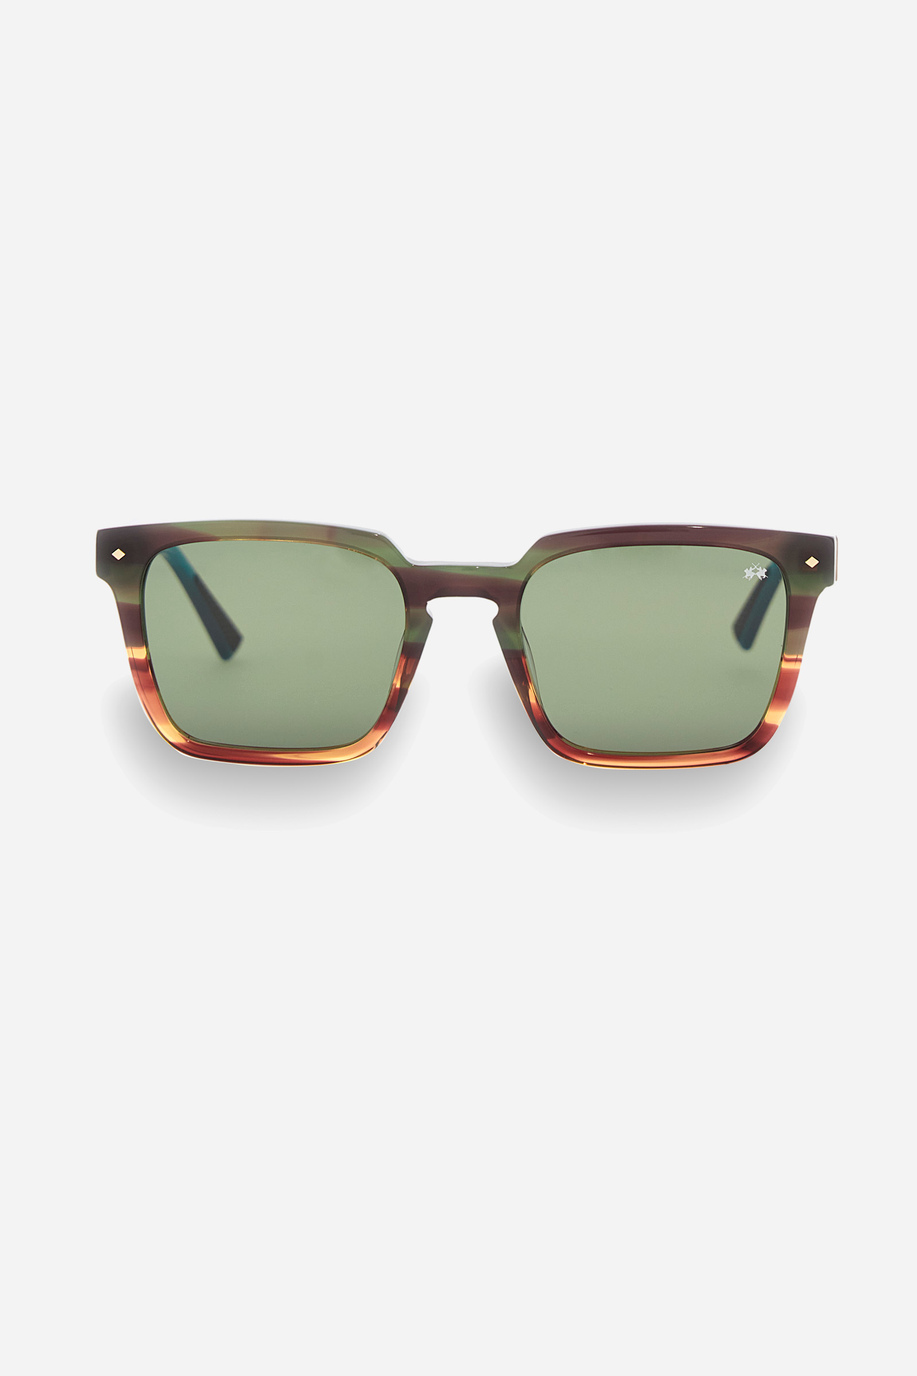 Men’s square sunglasses model - Accessories | La Martina - Official Online Shop